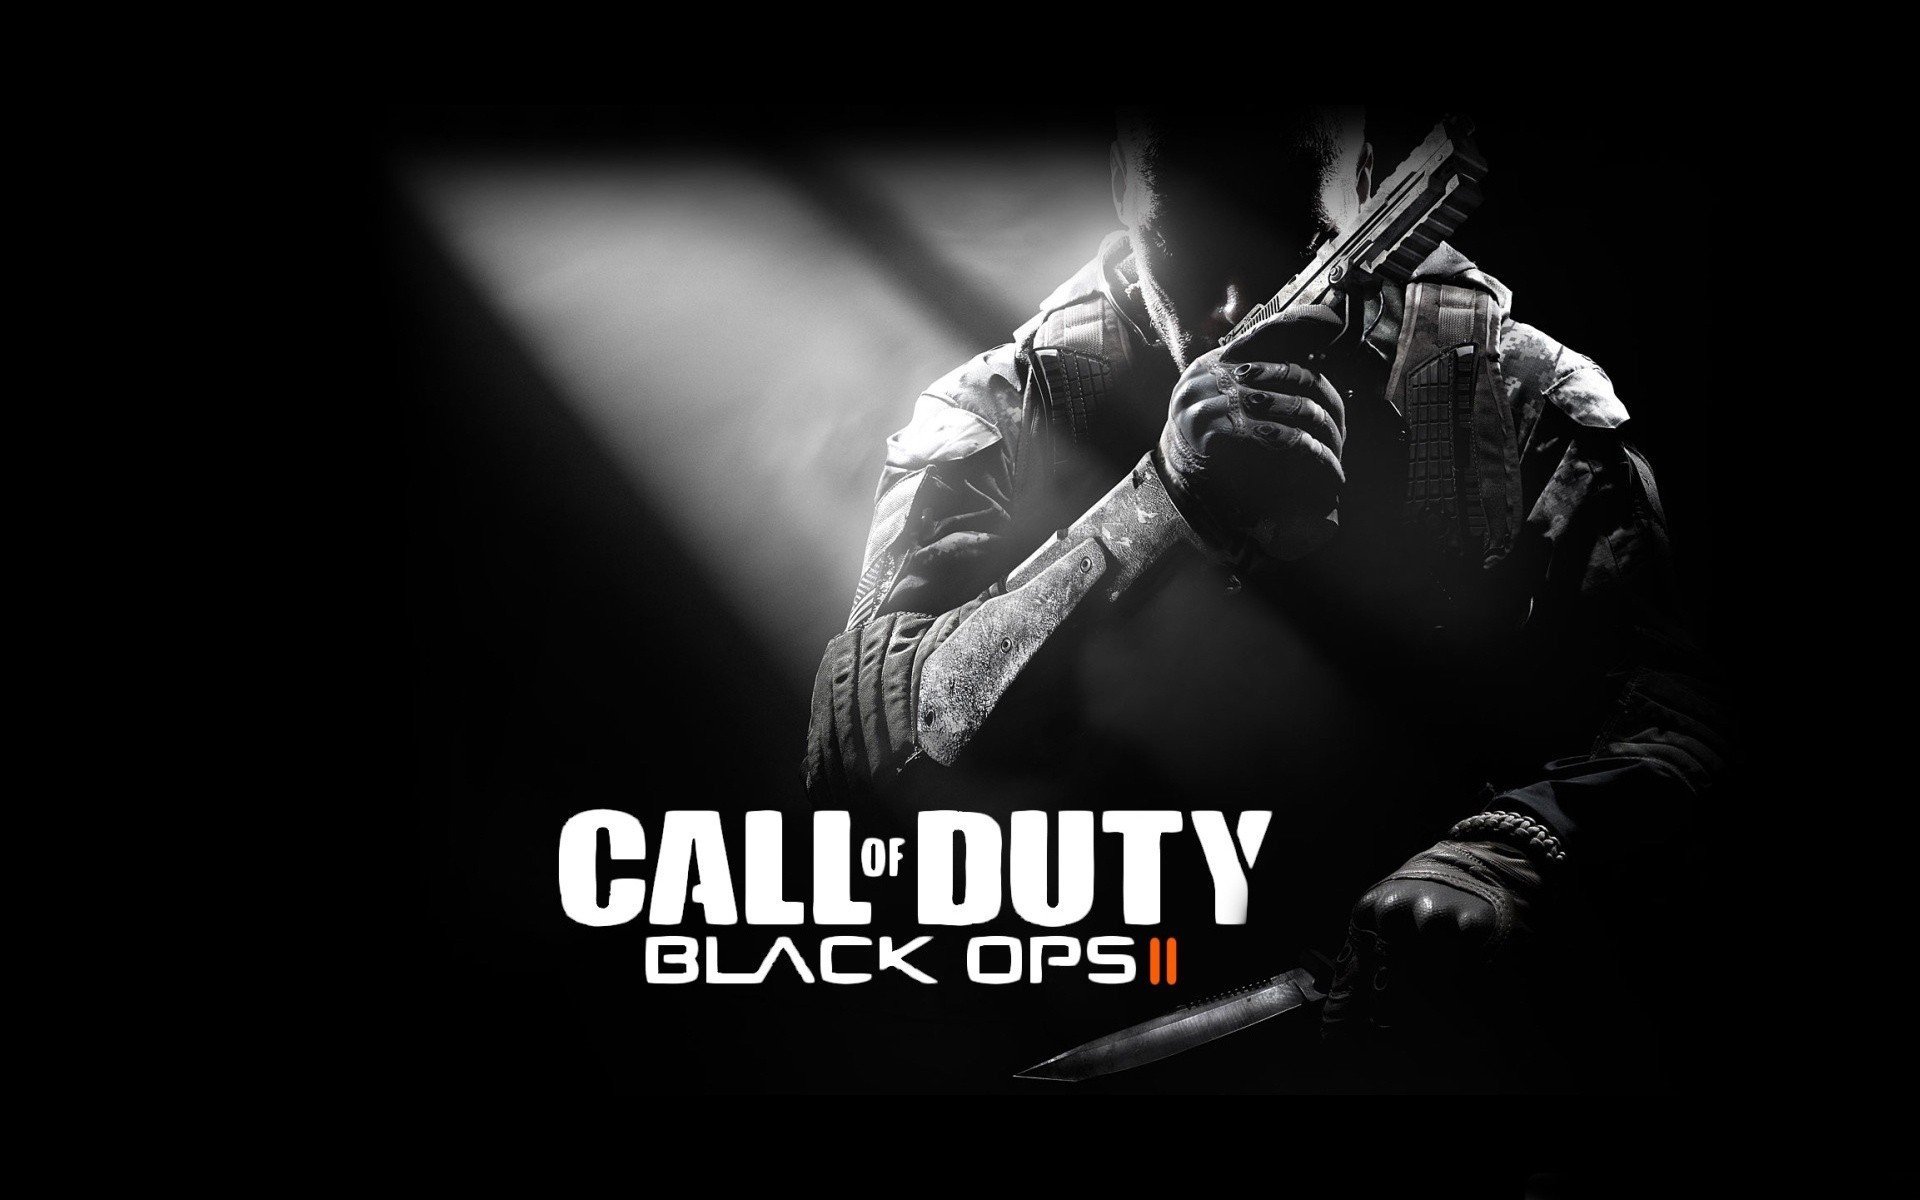 black ops 2 release date download